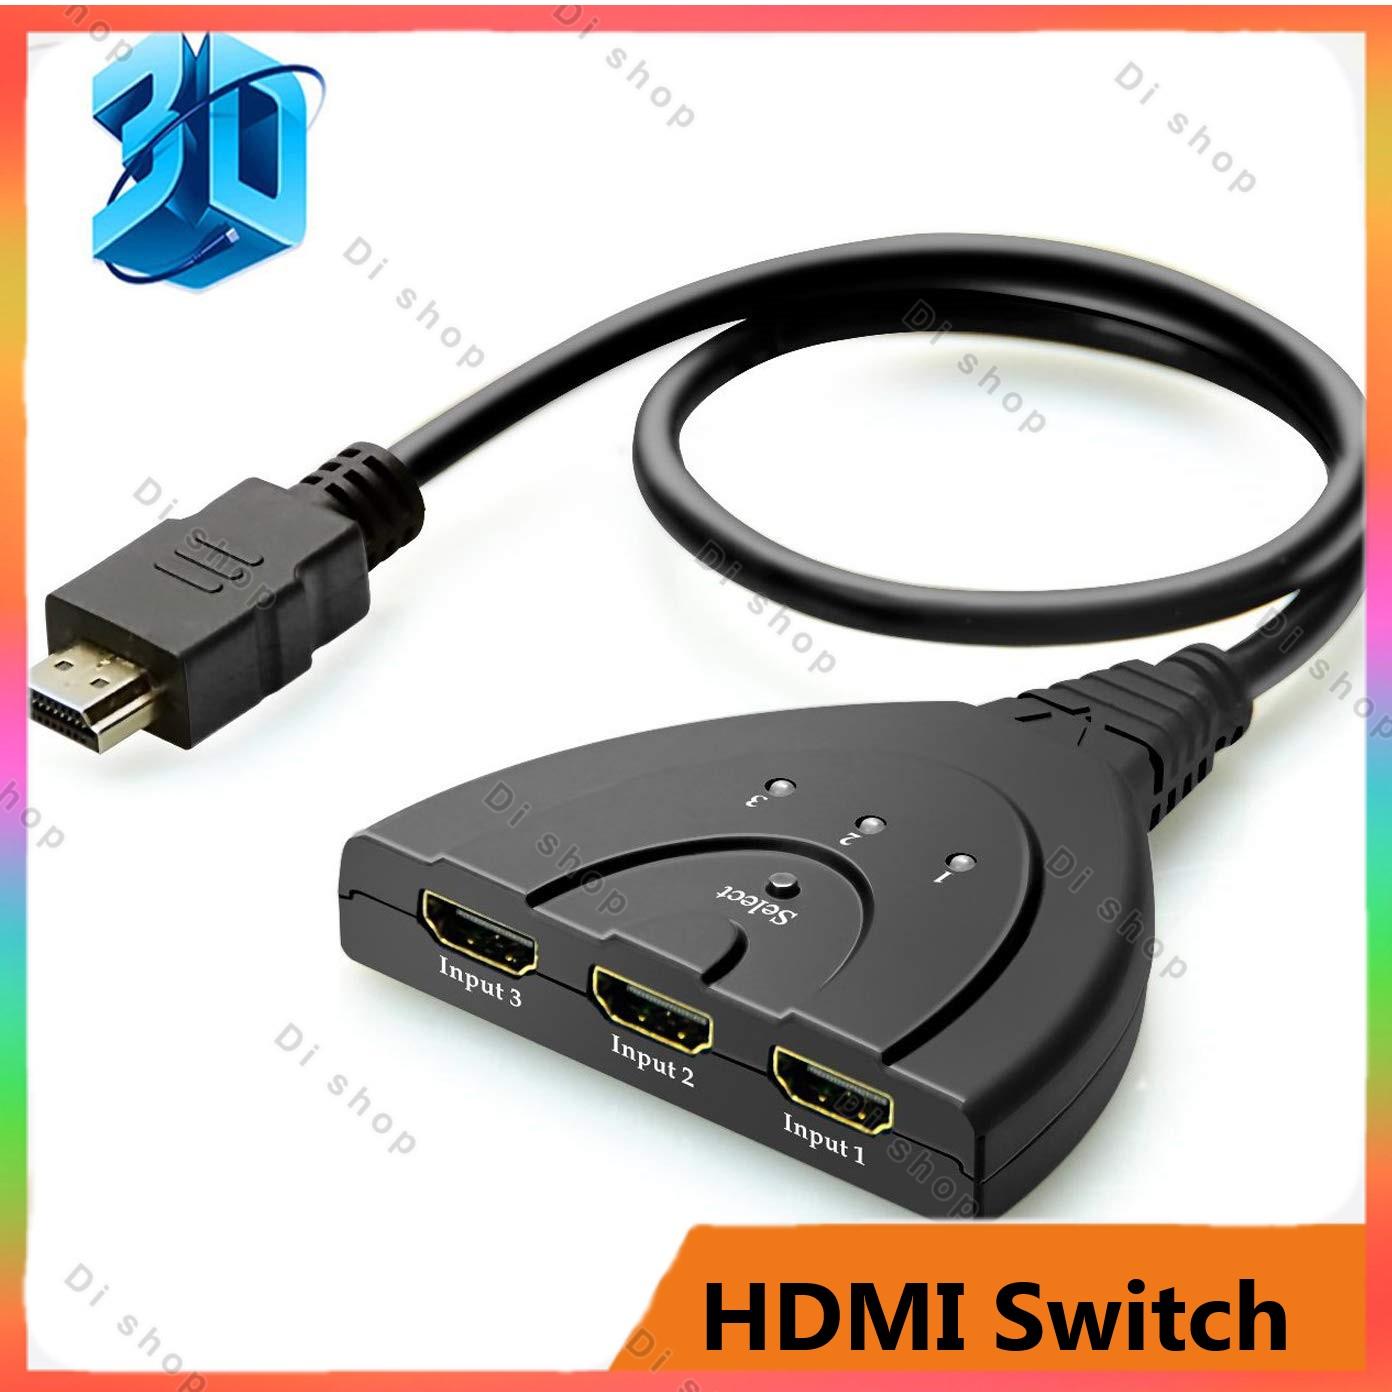 HDMI Switch IN 3 OUT 1 Port ตัวแยก HDMI 3 ทาง พร้อมสาย HDMI